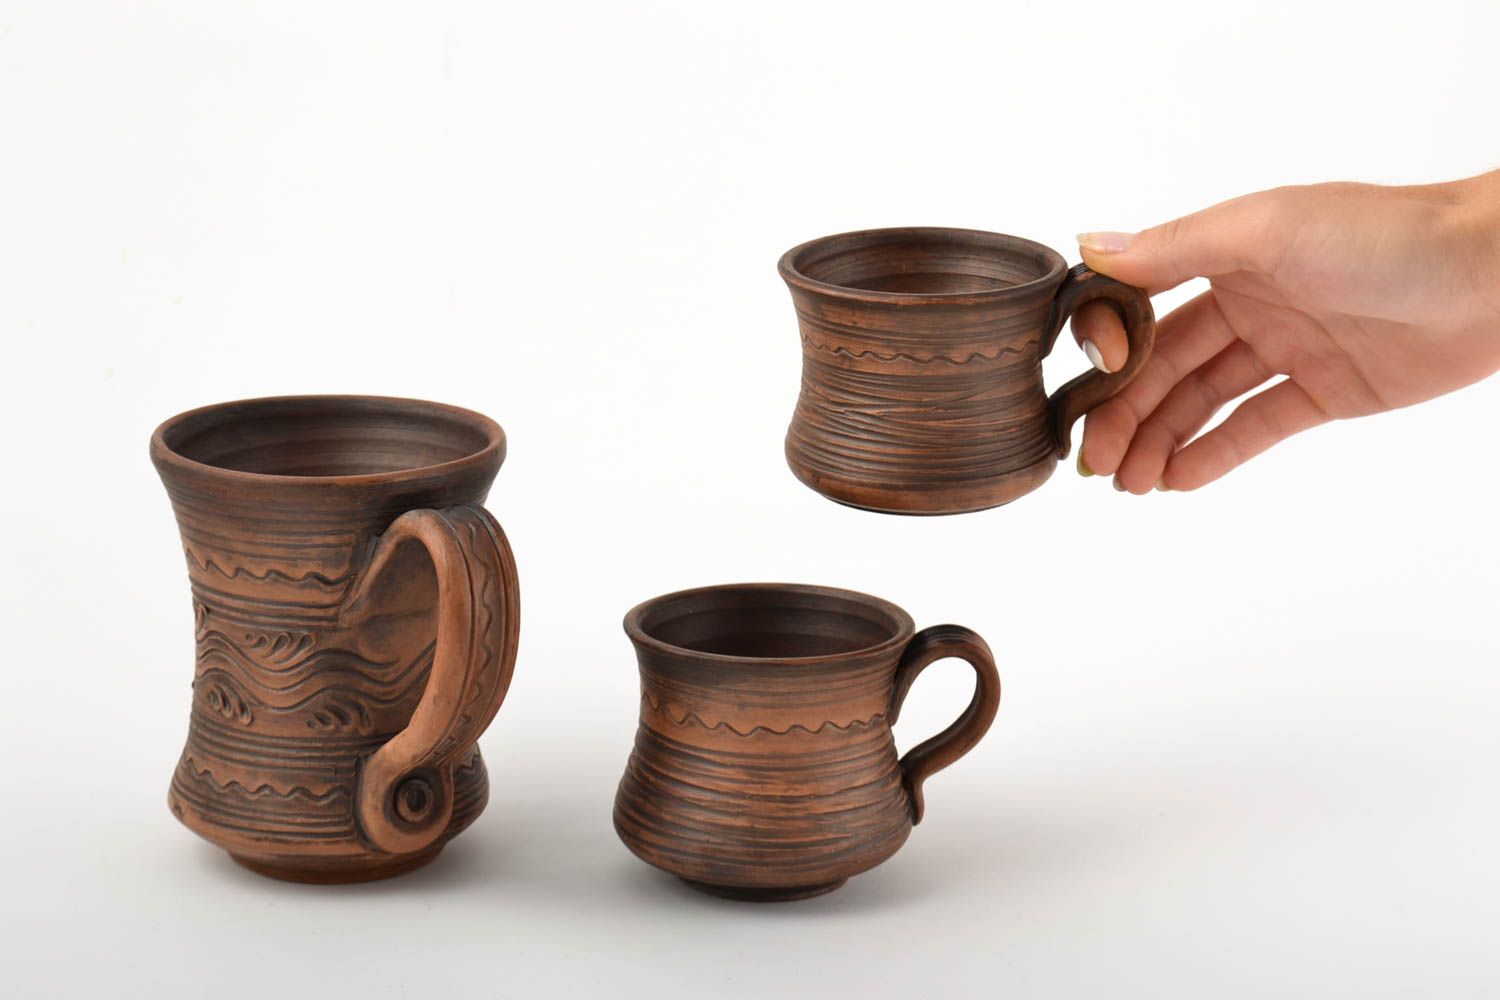 Juego de 3 tazas de barro hechas a mano accesorios de cocina vajillas modernas foto 2